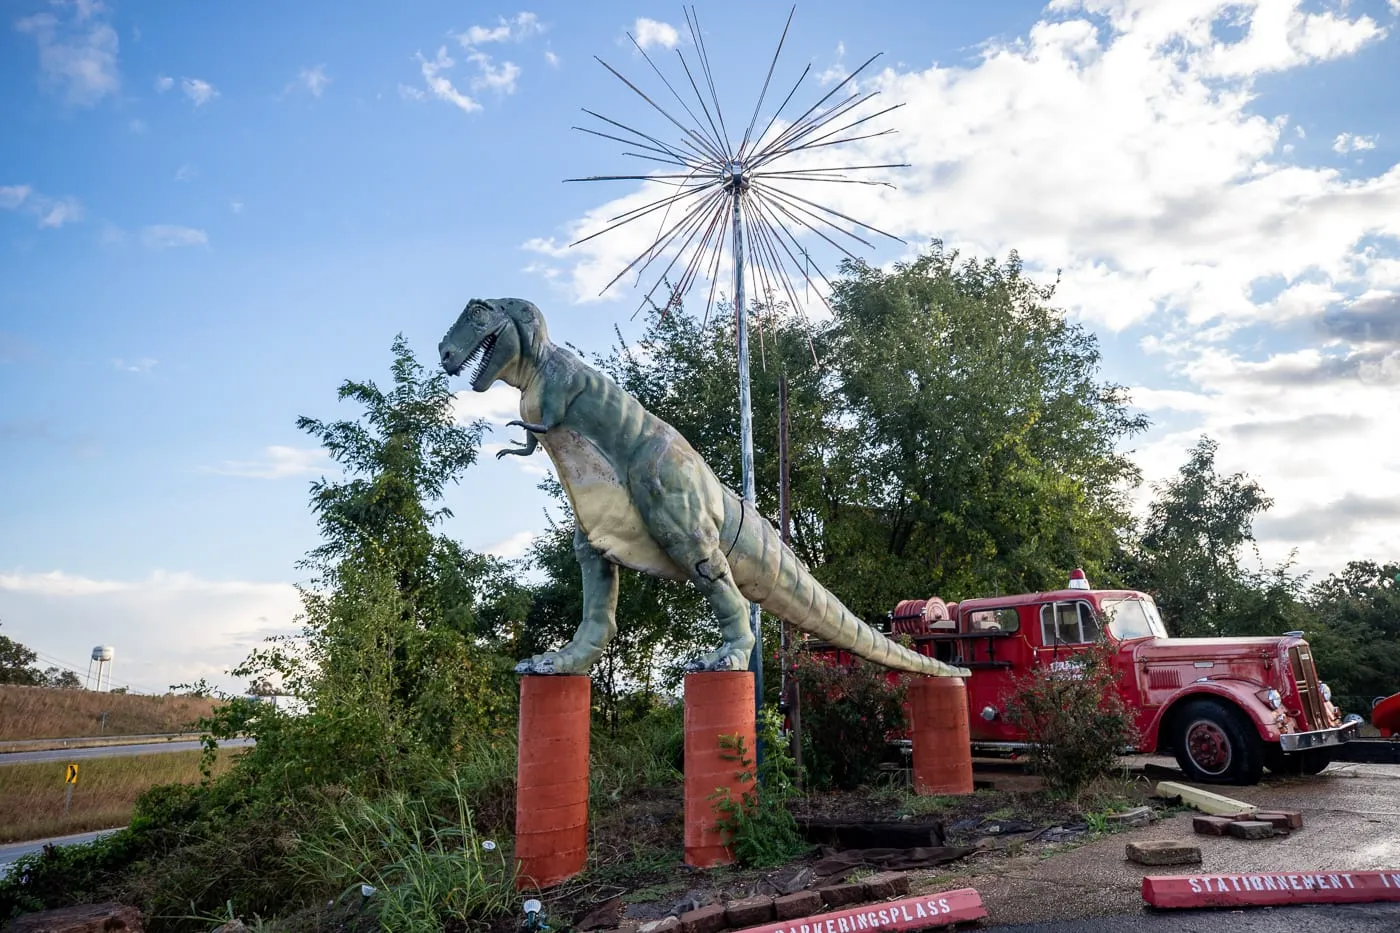 Dinosaurs at Uranus, Missouri and the Uranus Fudge Factory and General Store - Route 66 Roadside Attraction